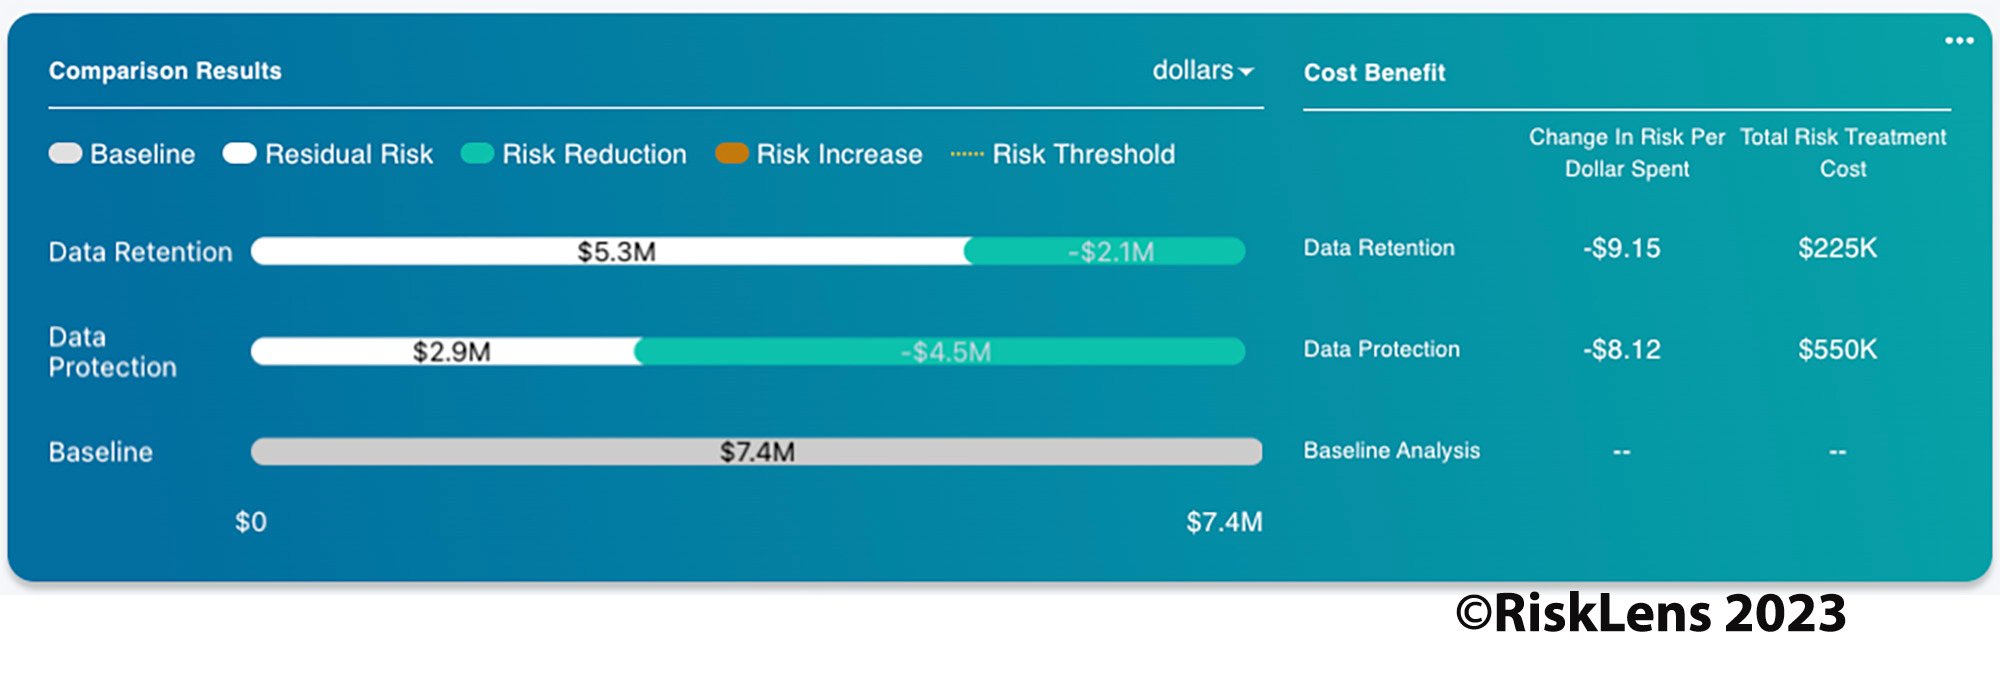 RiskLens Platform - Cost Benefit Analysis-1